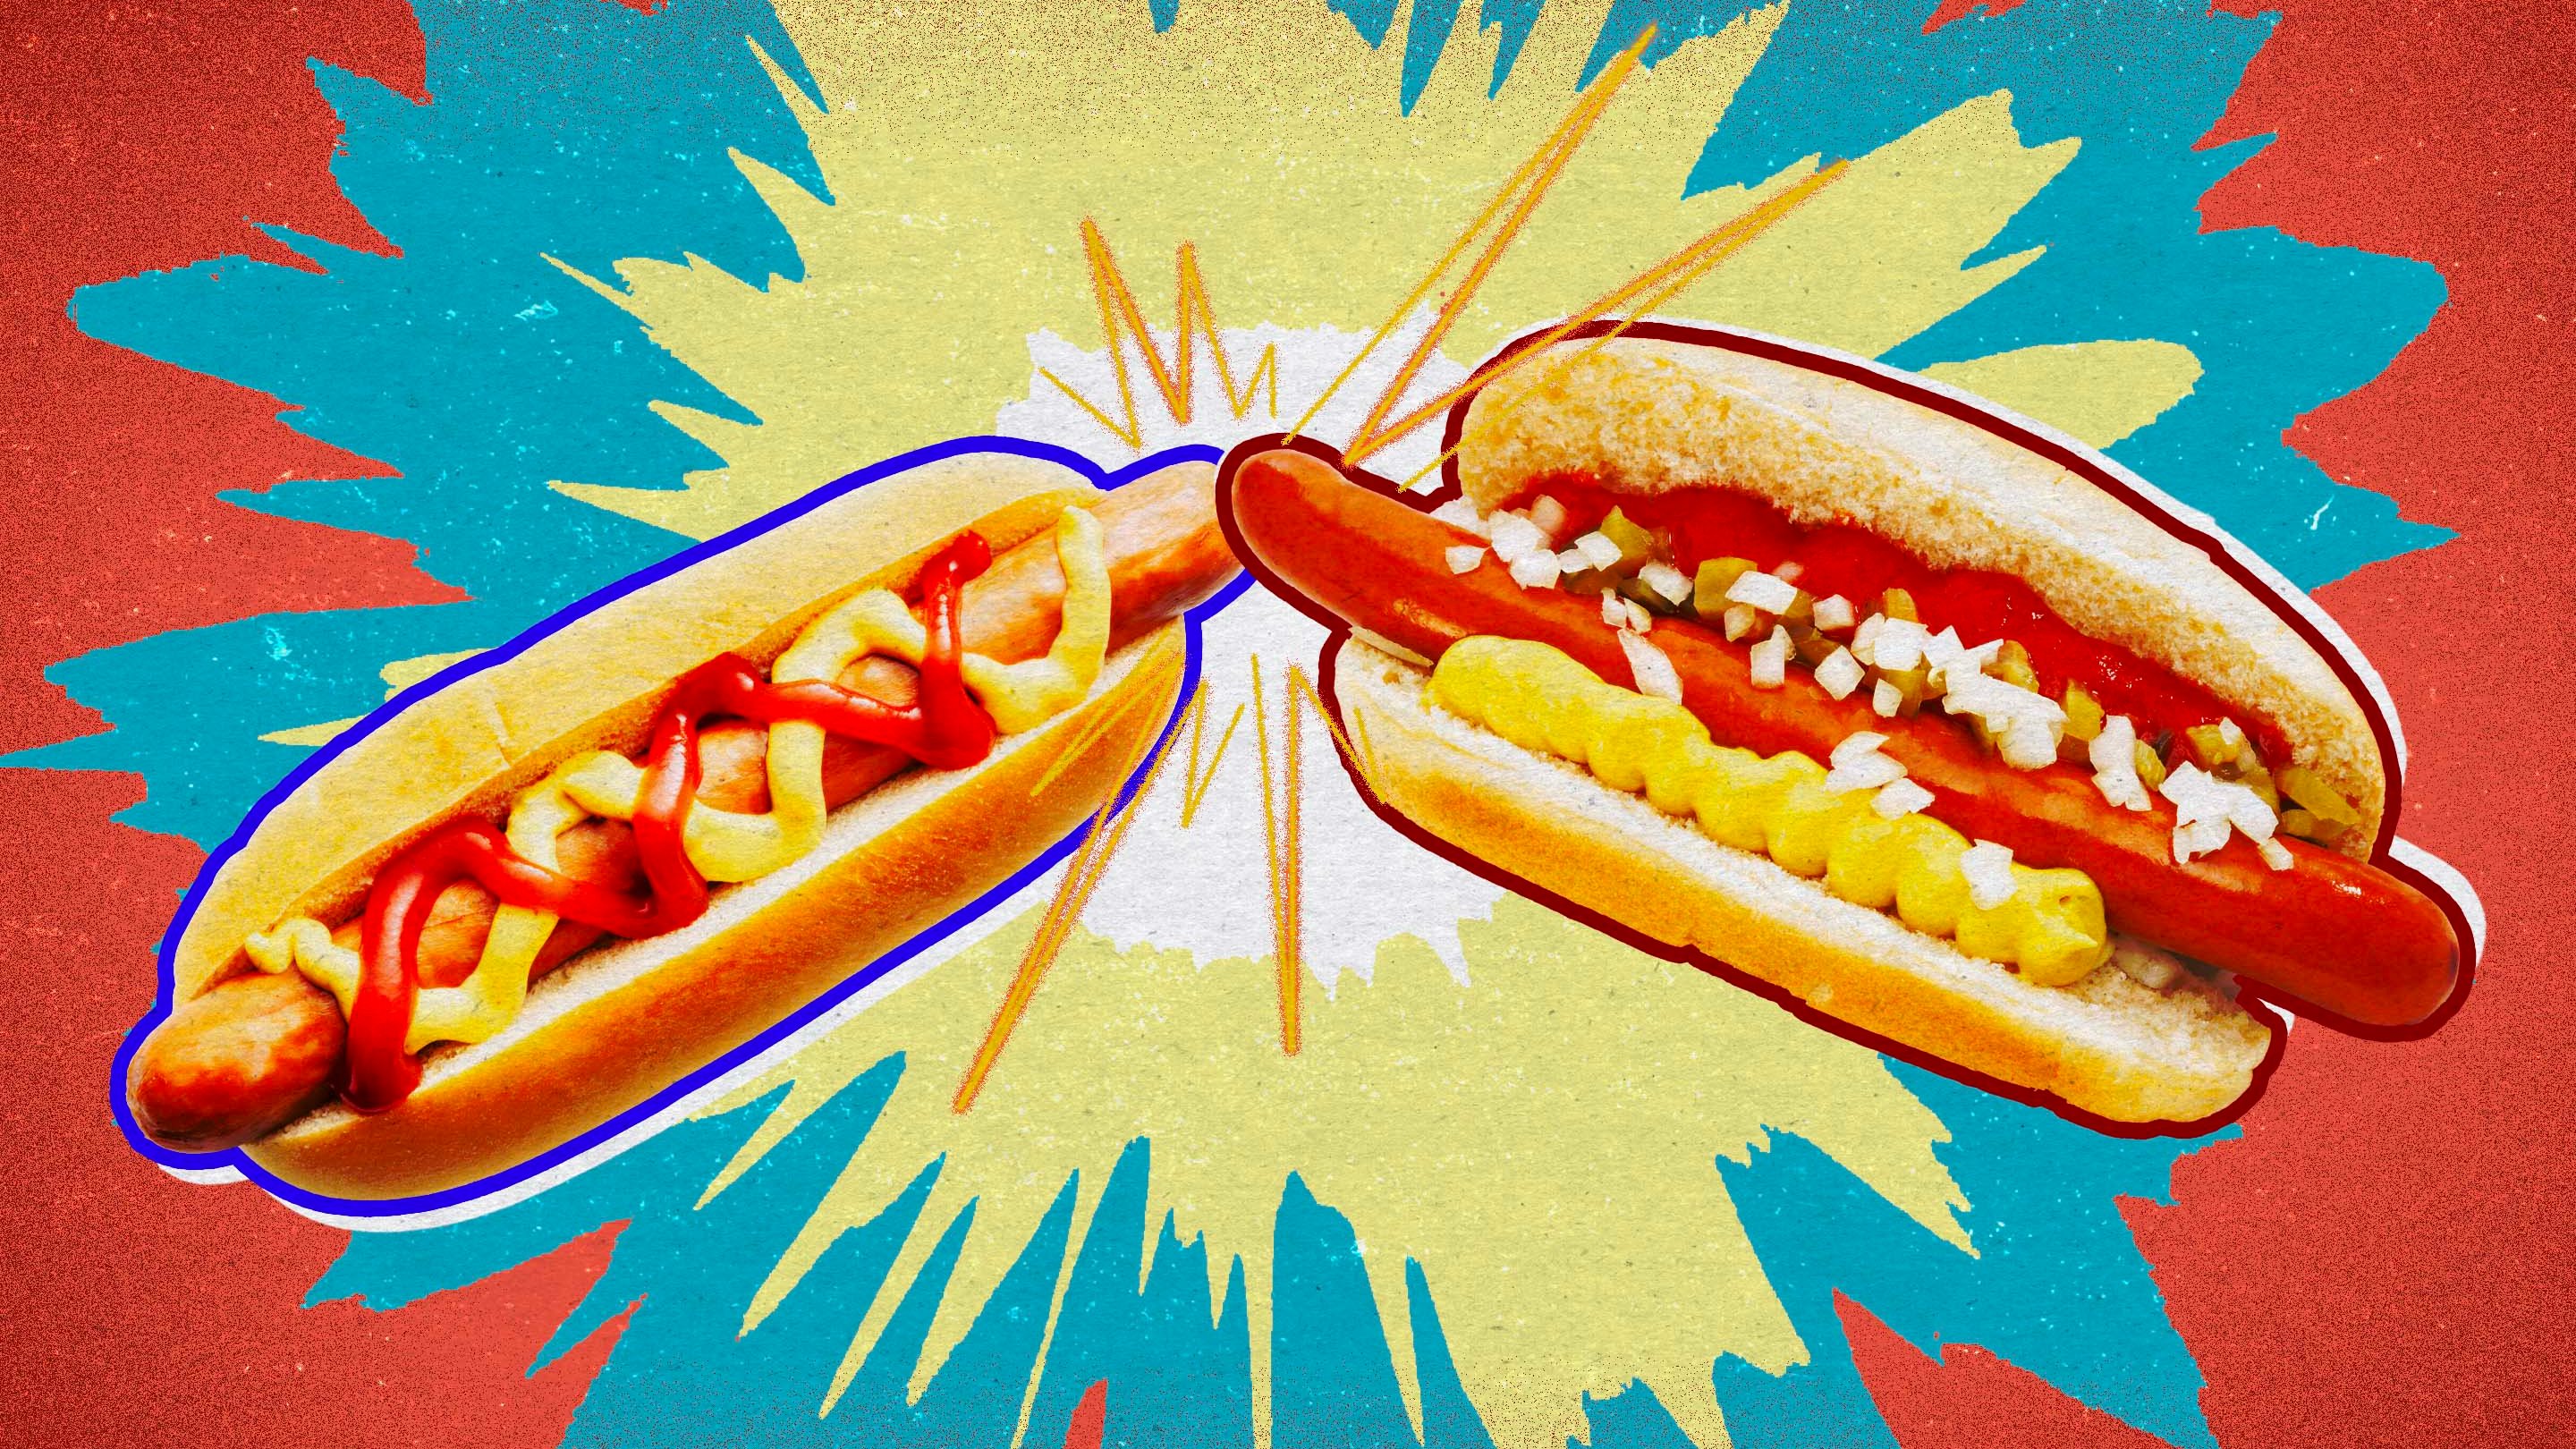 Costco $1.50 Hot Dog Deal Undercut on Price by Sam's Club